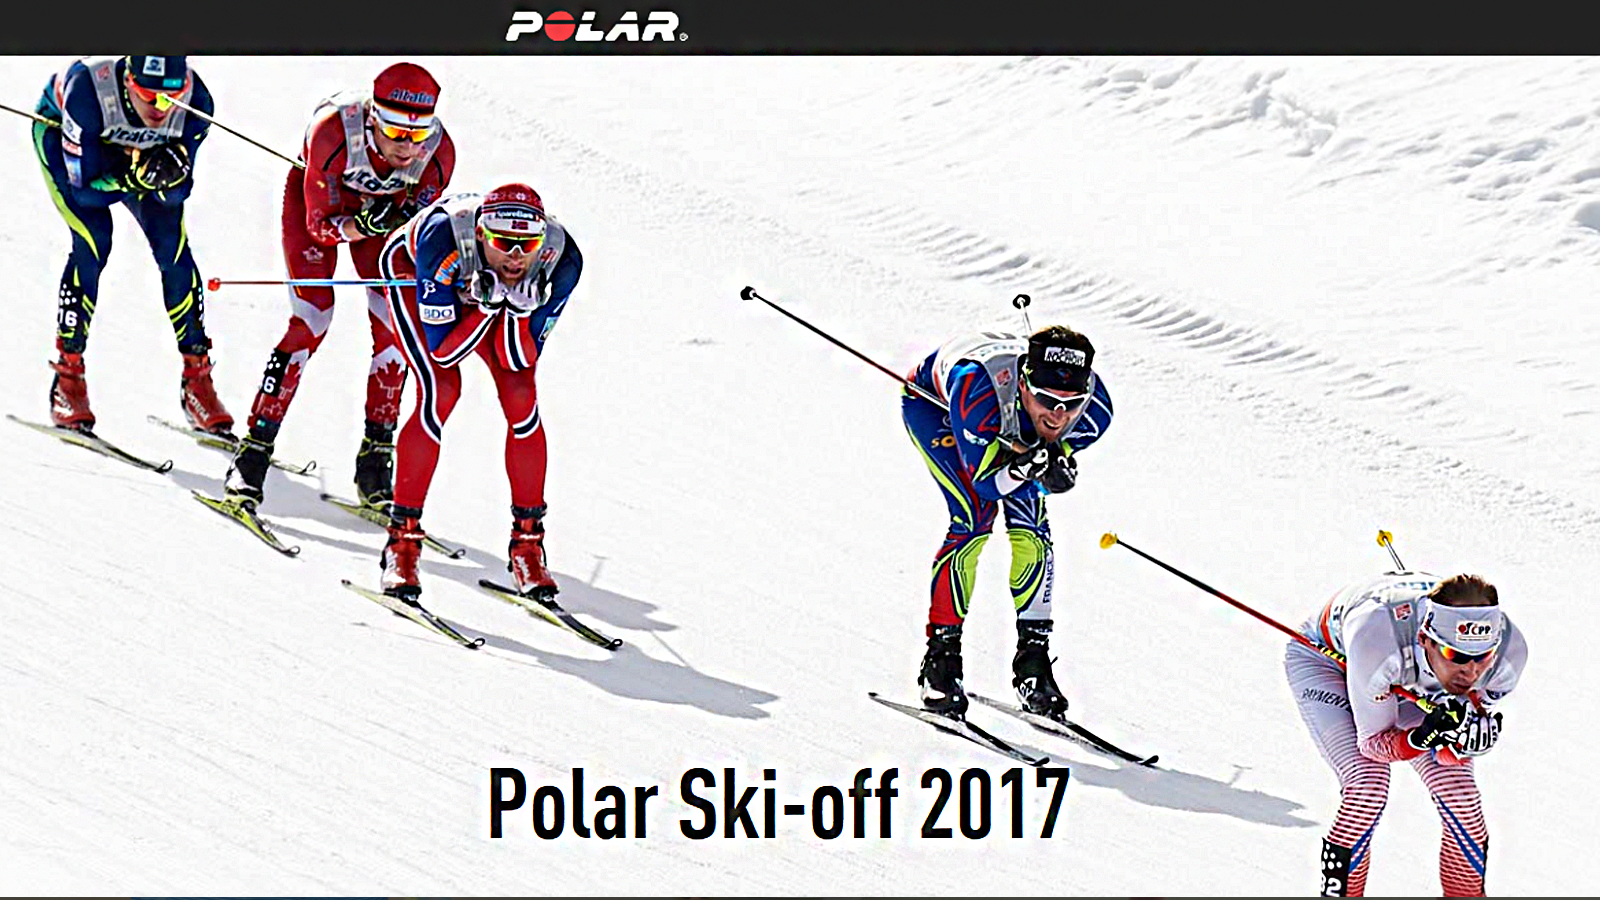 Polar Ski-off